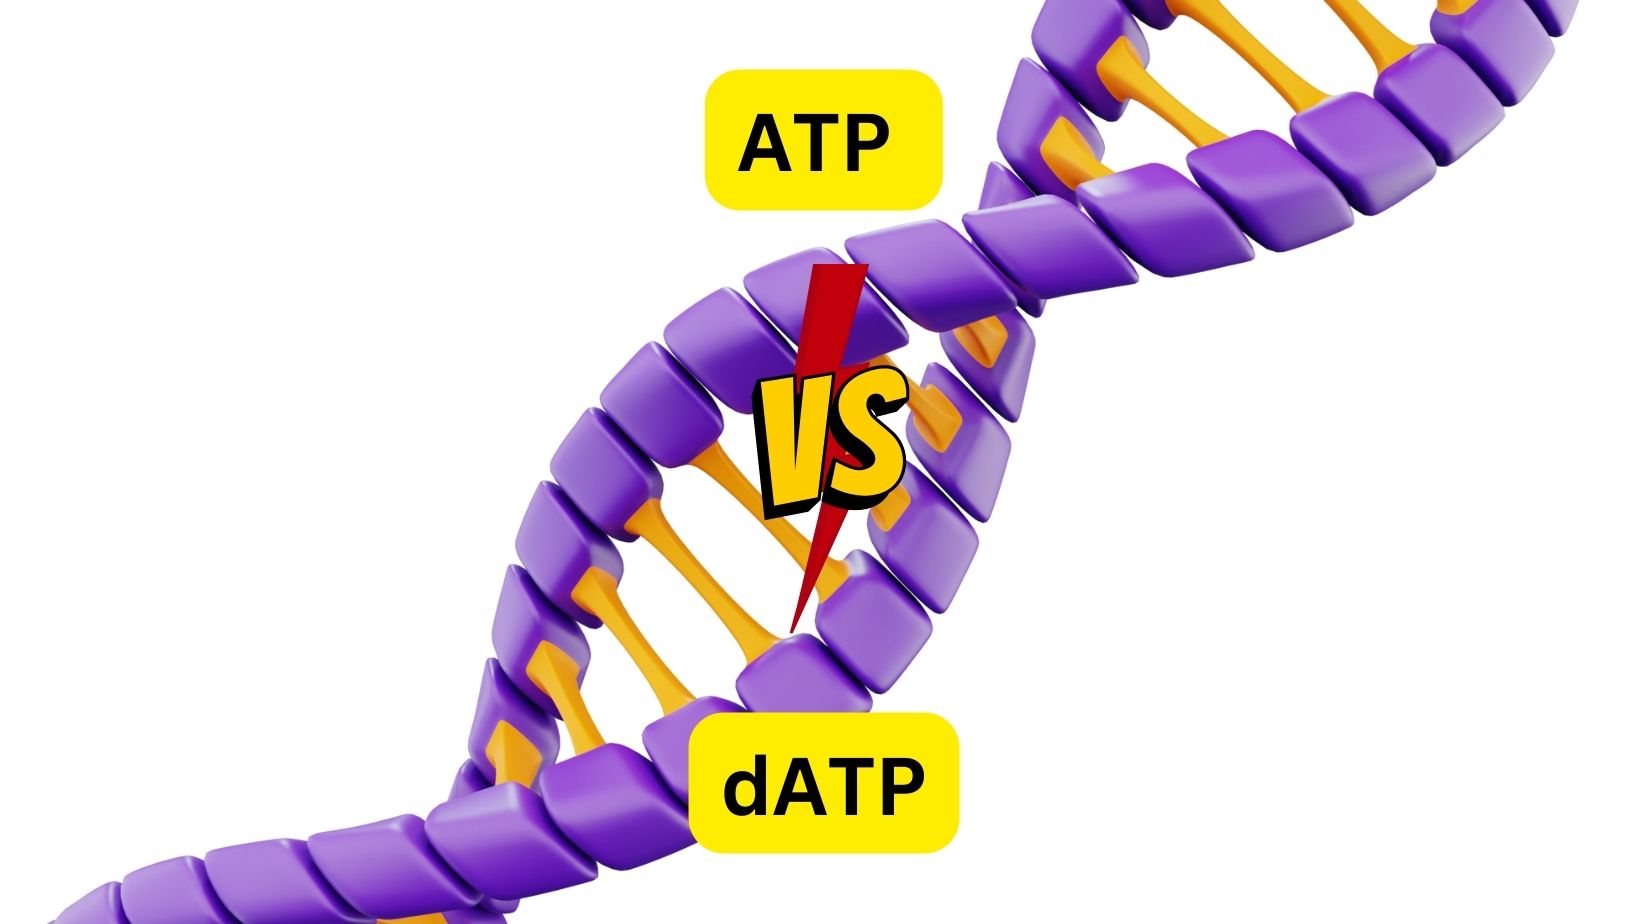 ATP vs dATP